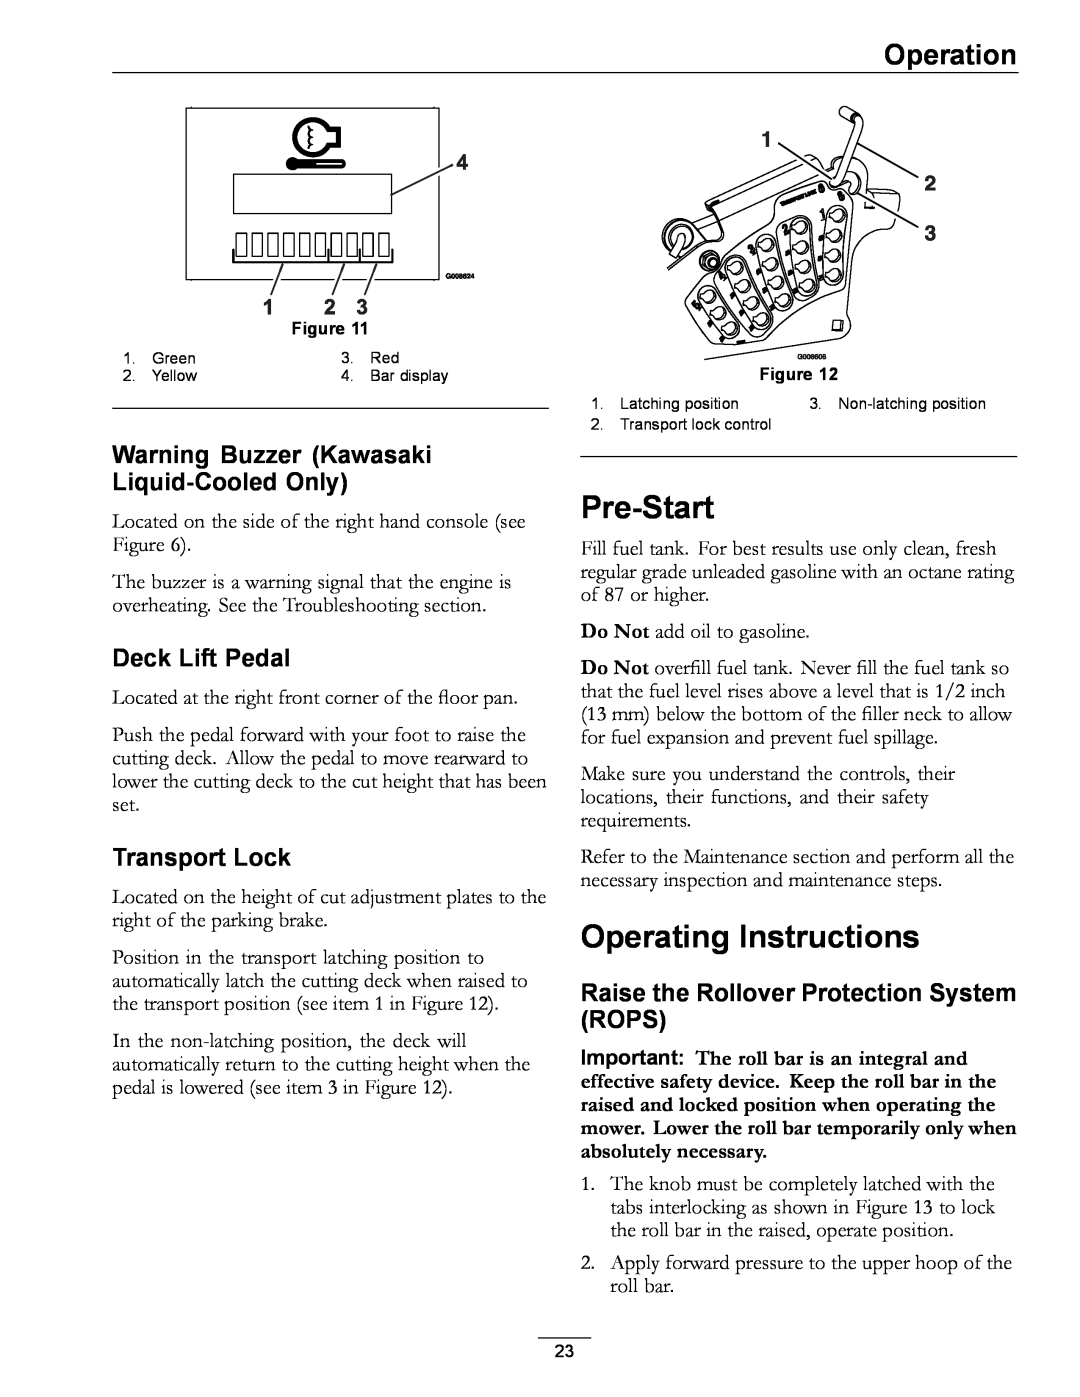 Exmark 000 & higher manual Pre-Start, Operating Instructions, Warning Buzzer Kawasaki Liquid-CooledOnly, Deck Lift Pedal 